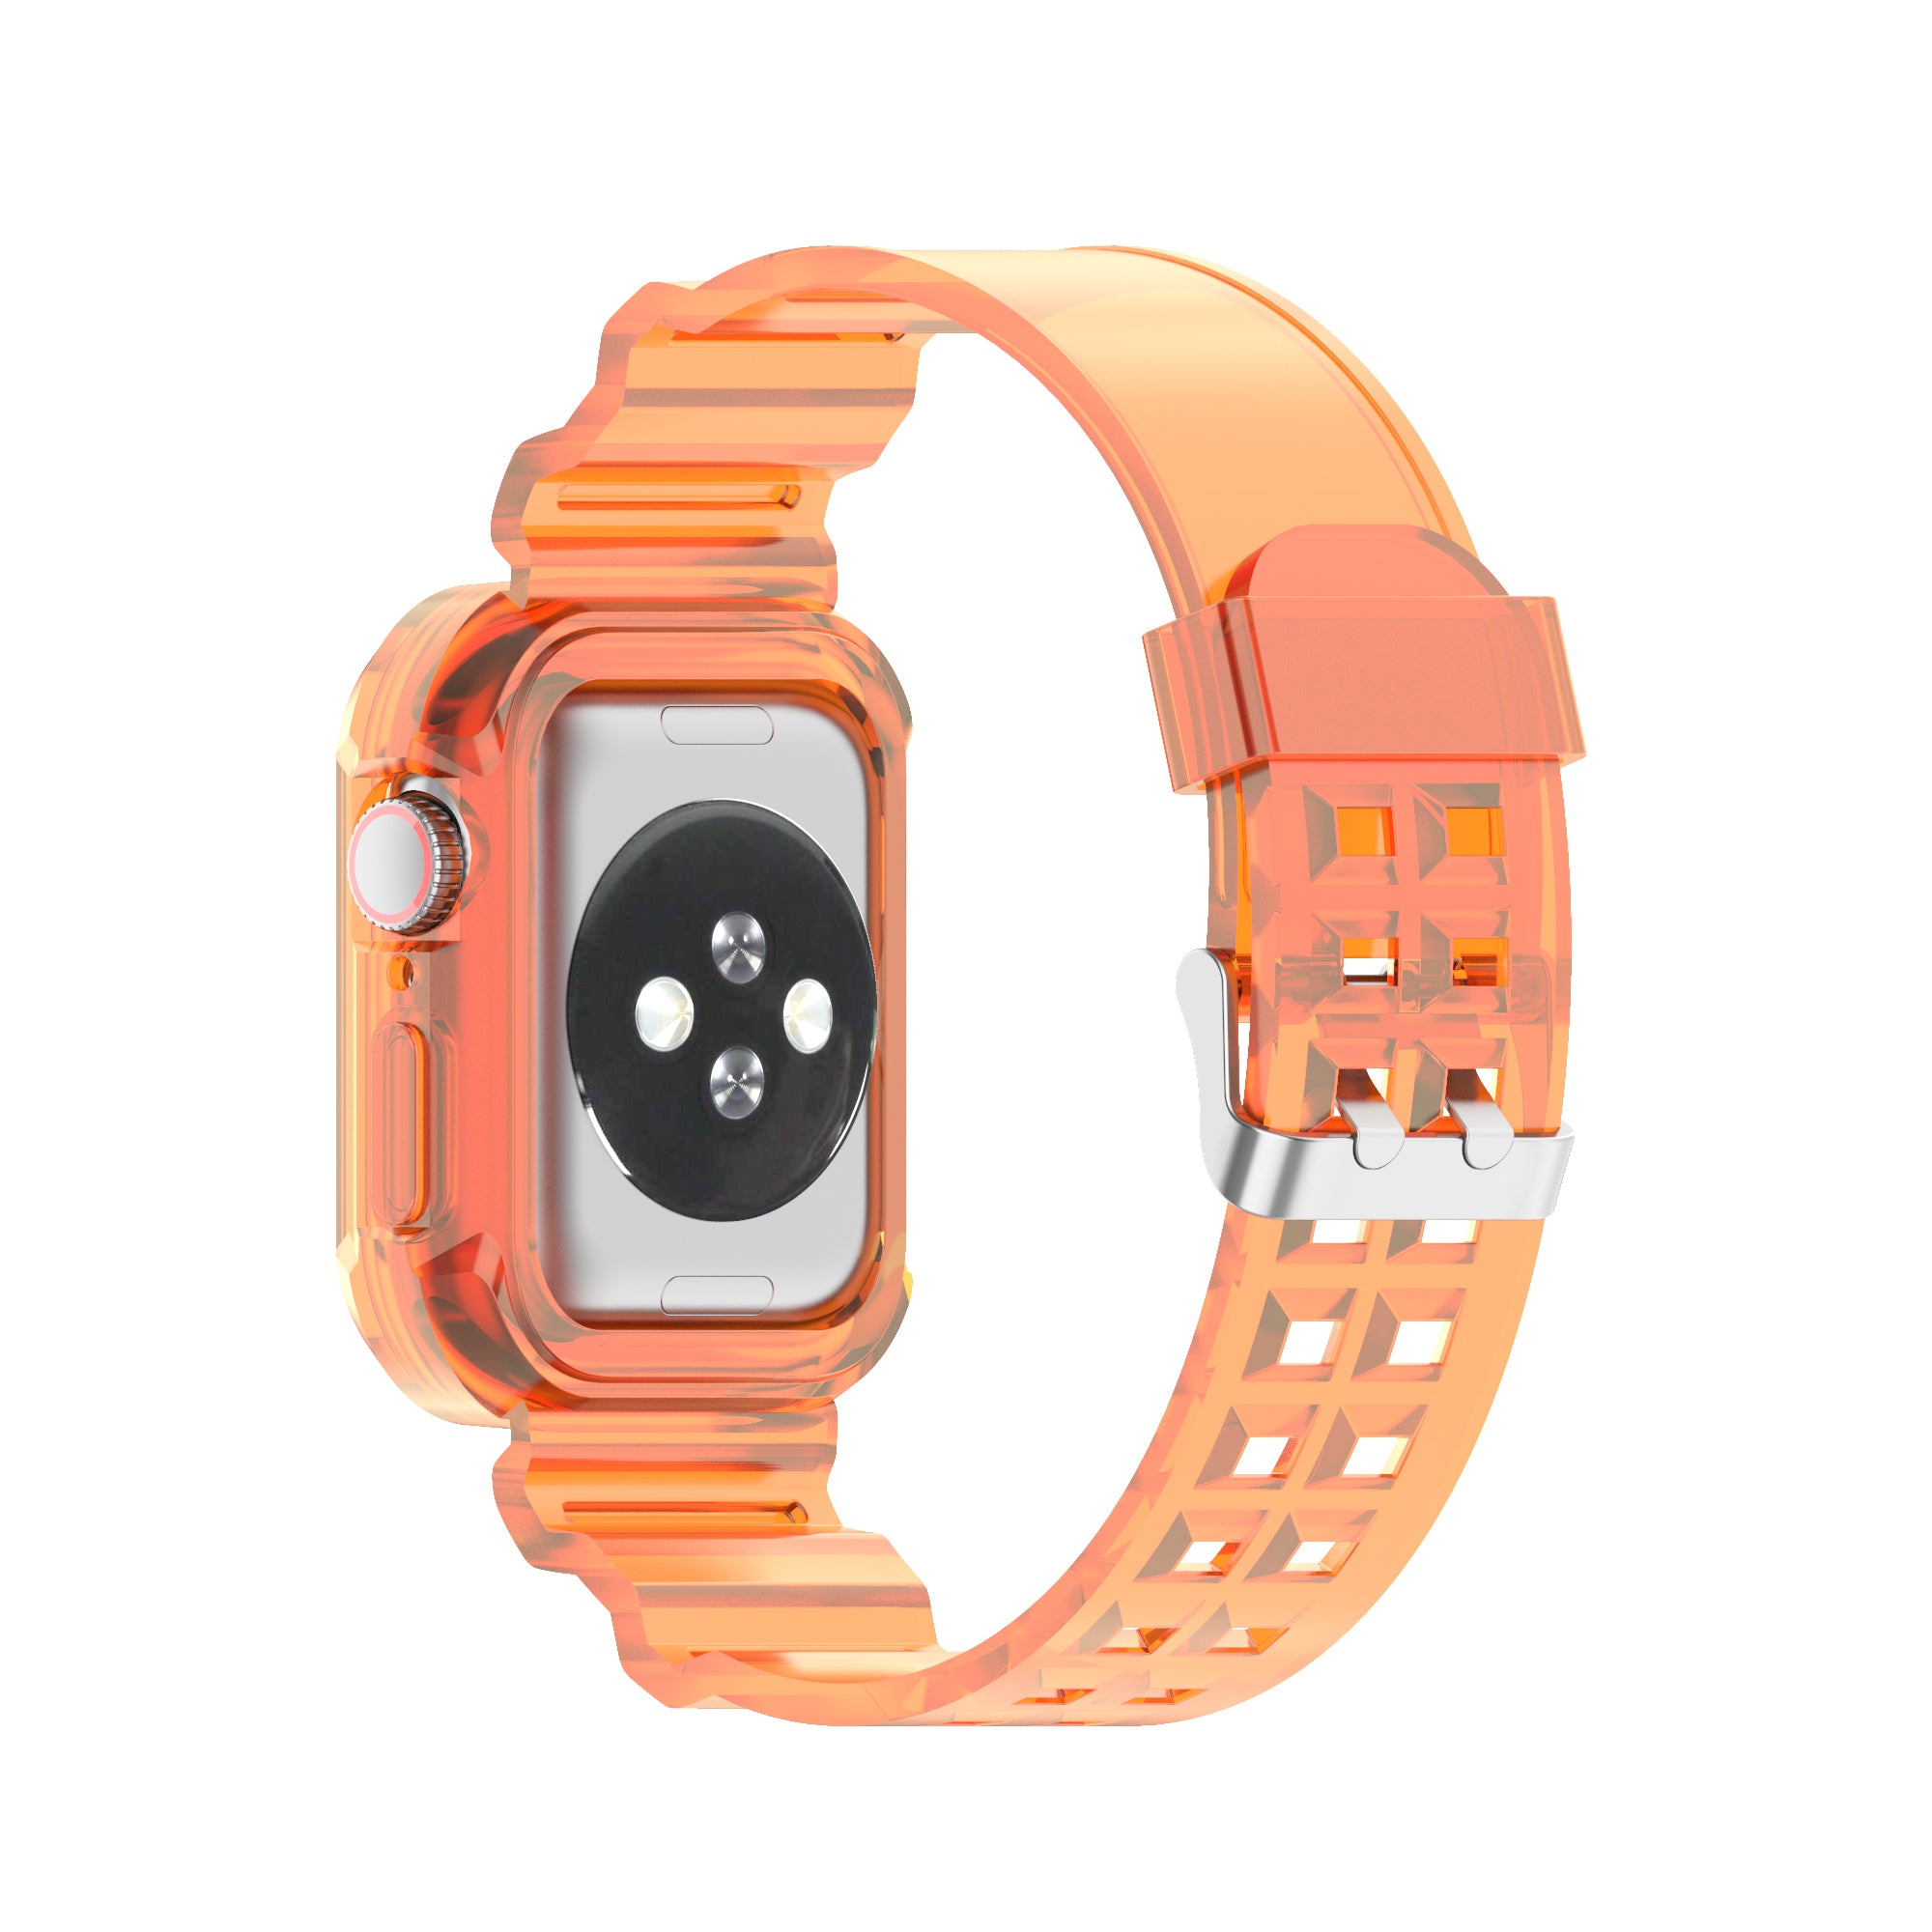 [Apple Watch] Transparent Case & Strap